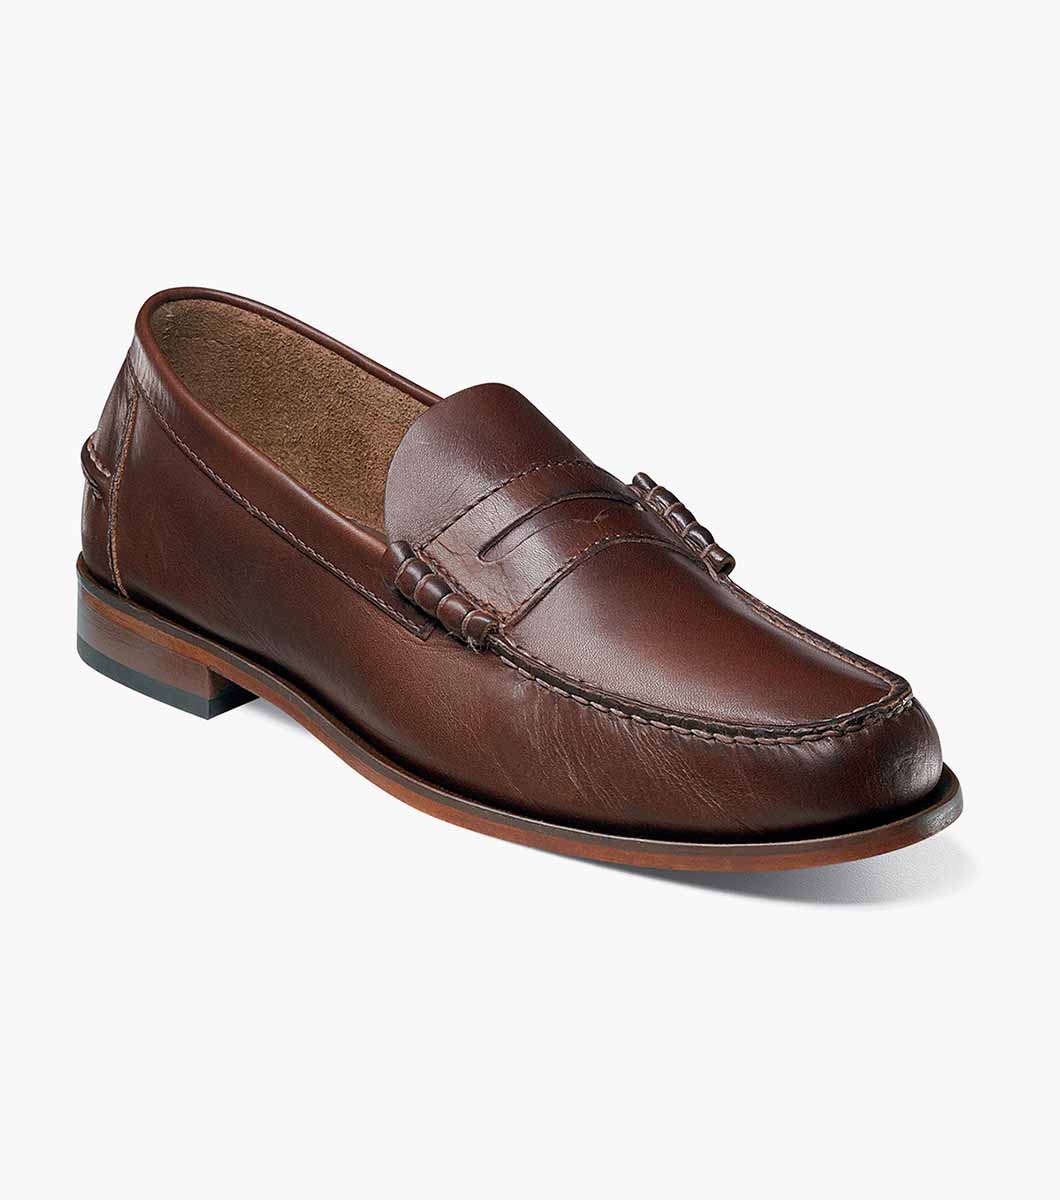 florsheim men's berkley dress shoe slip on penny loafer